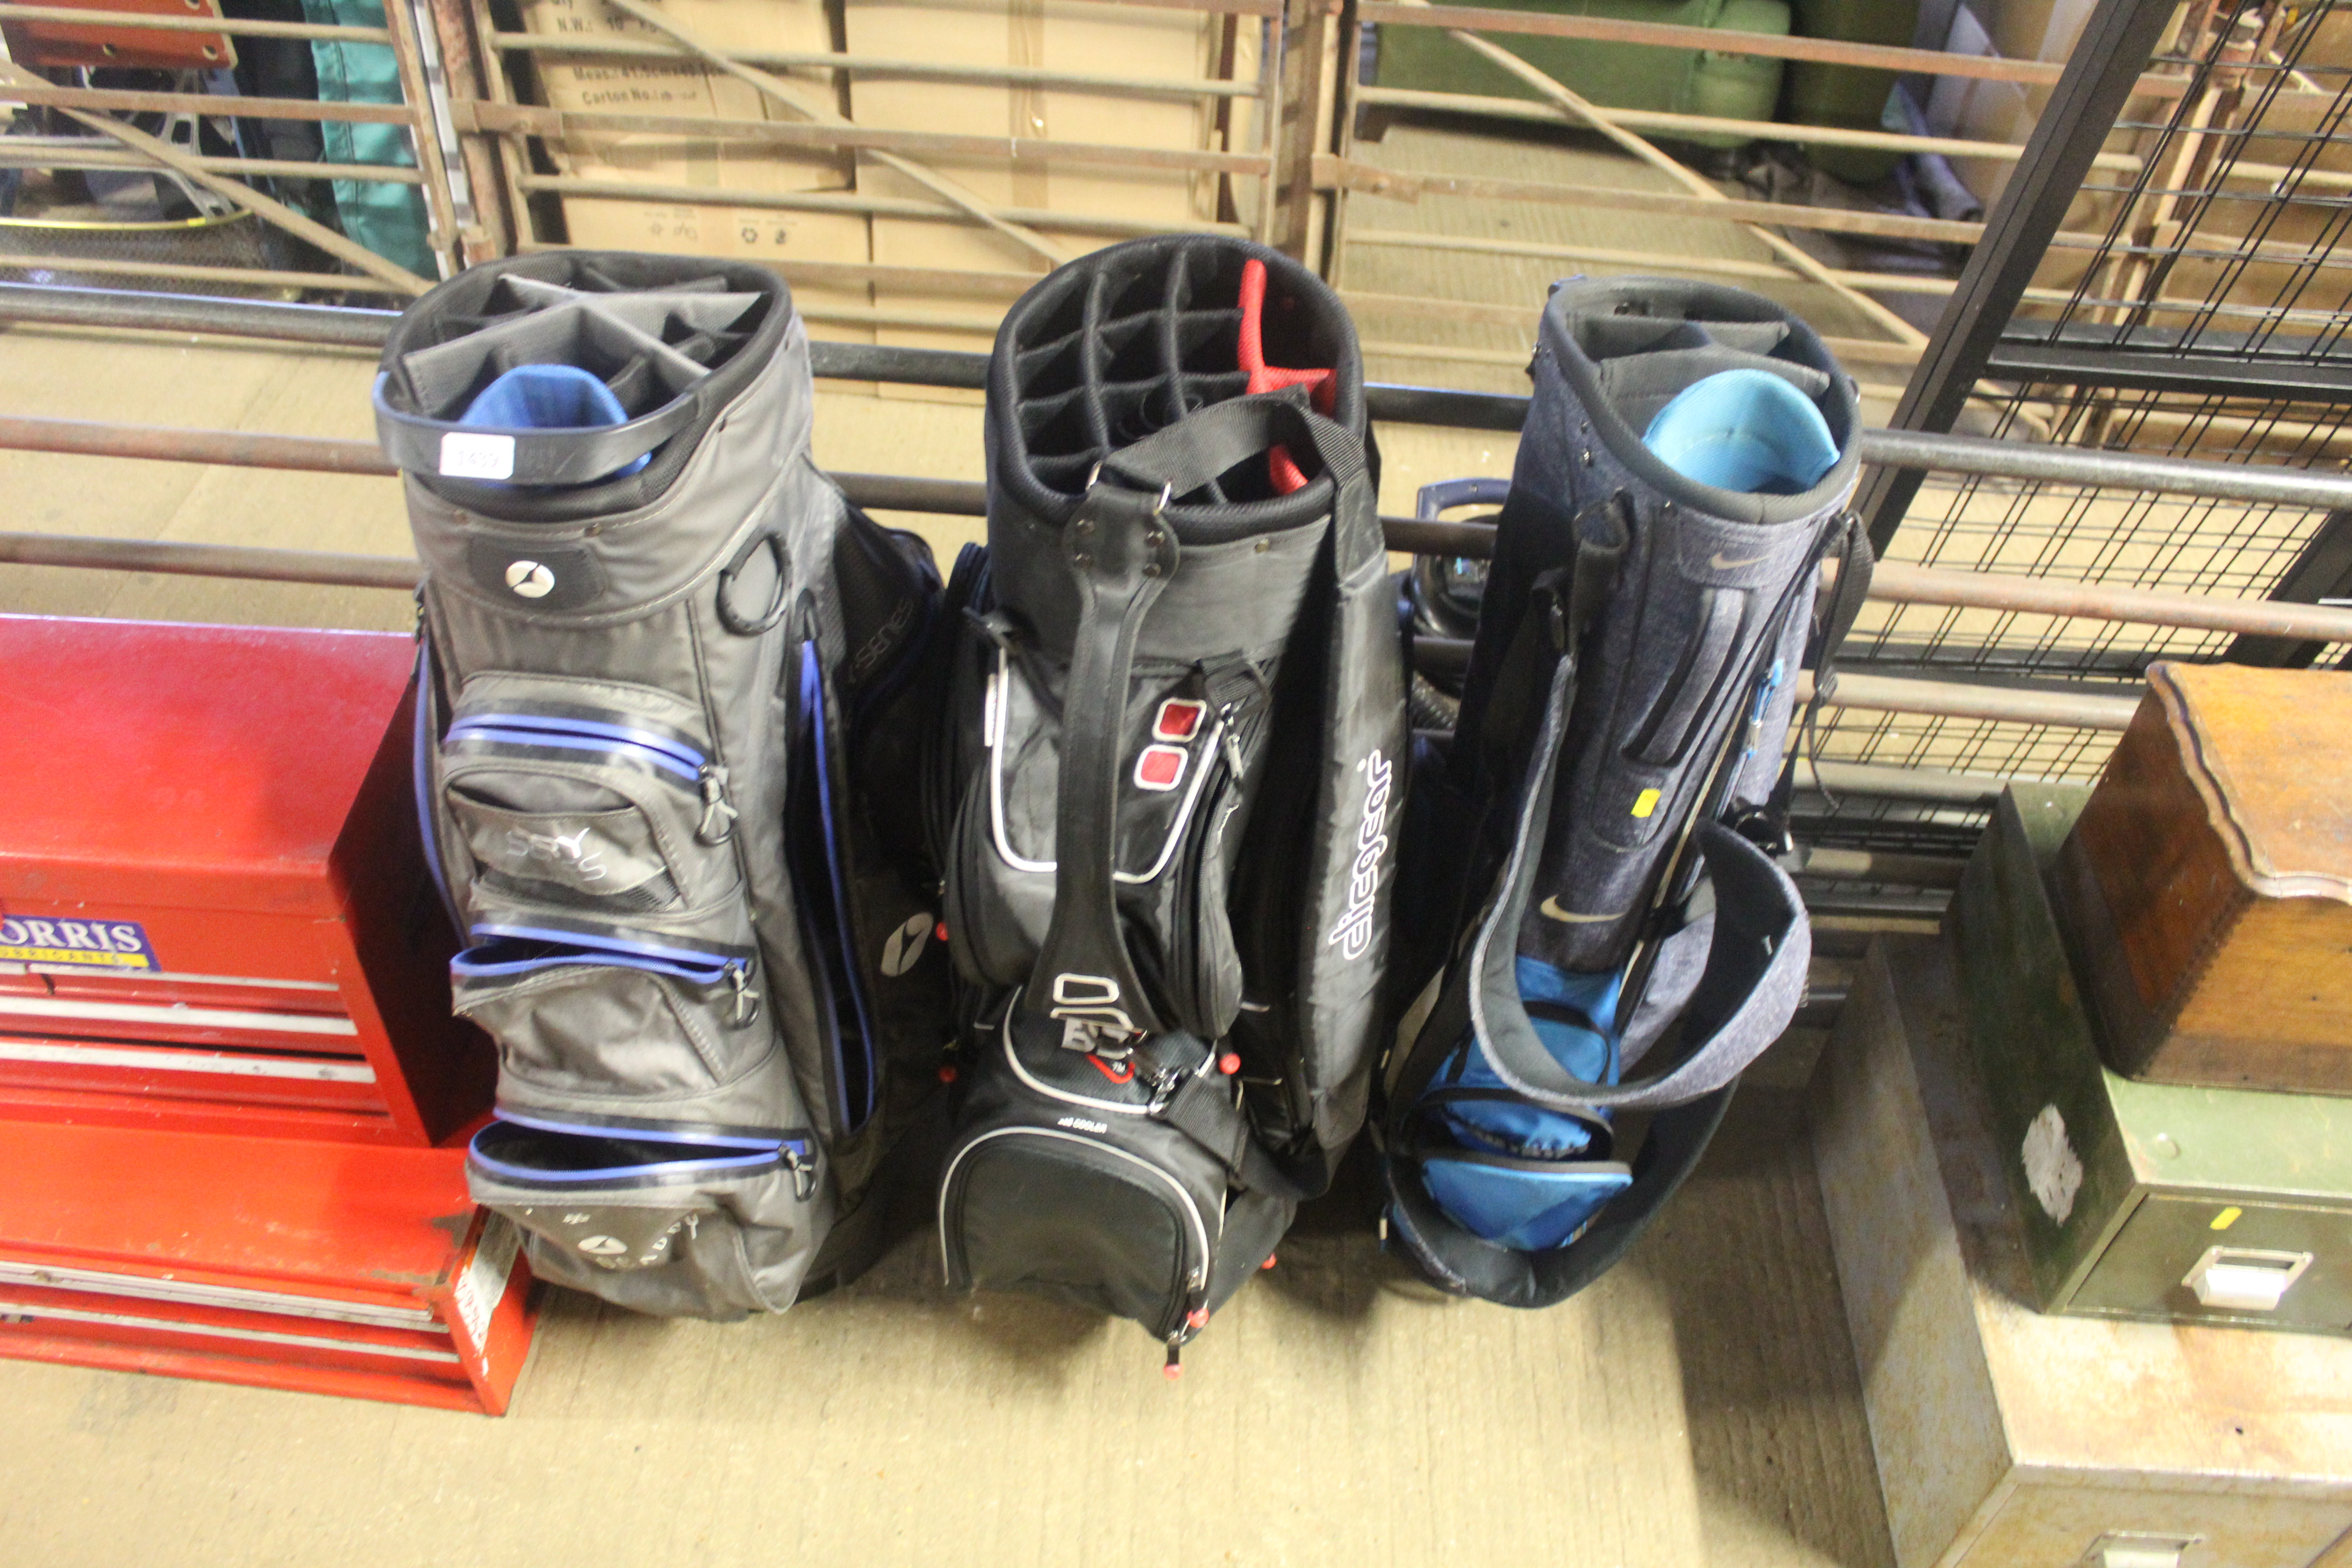 A Motocaddy dry series golf bag; a Clicgear golf b